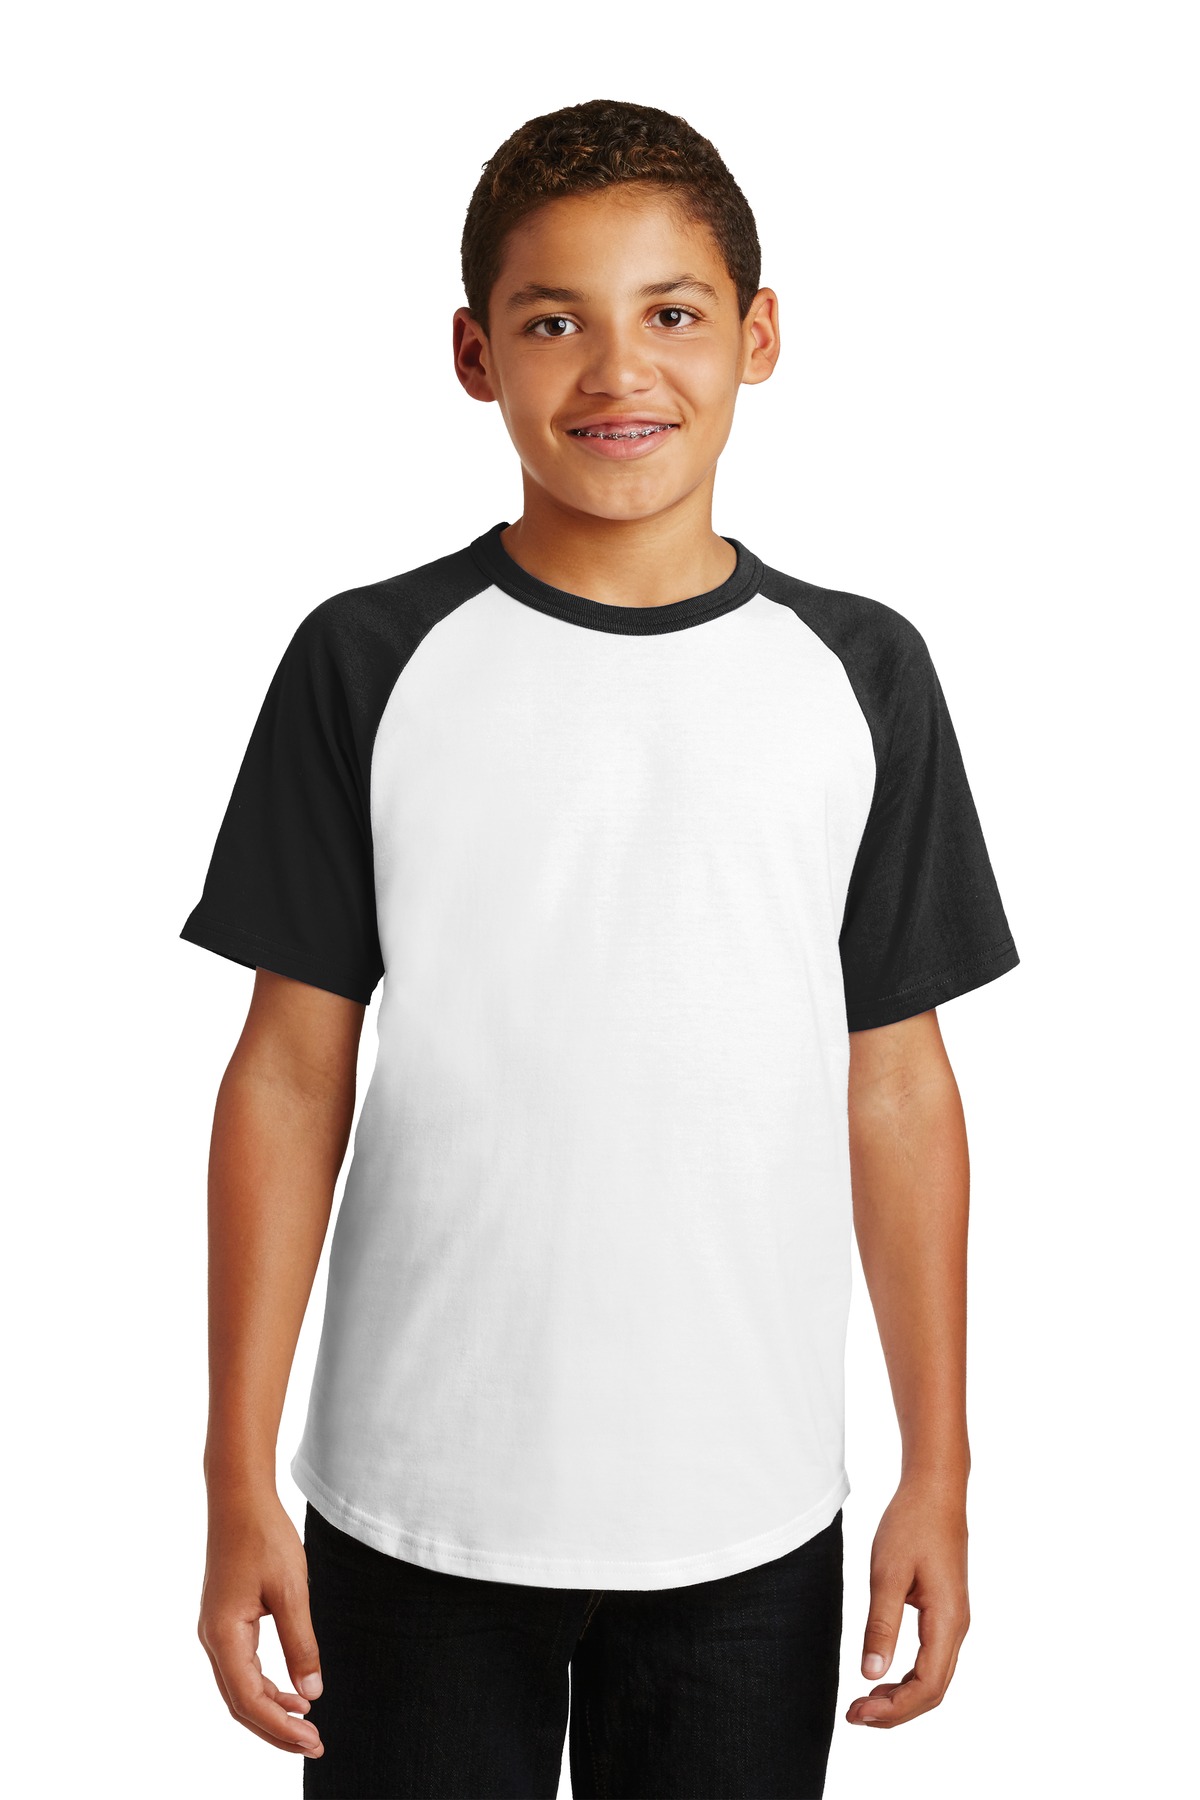 Sport-Tek Activewear Youth T-Shirts for Hospitality ® Youth Short Sleeve Colorblock Raglan Jersey.-Sport-Tek